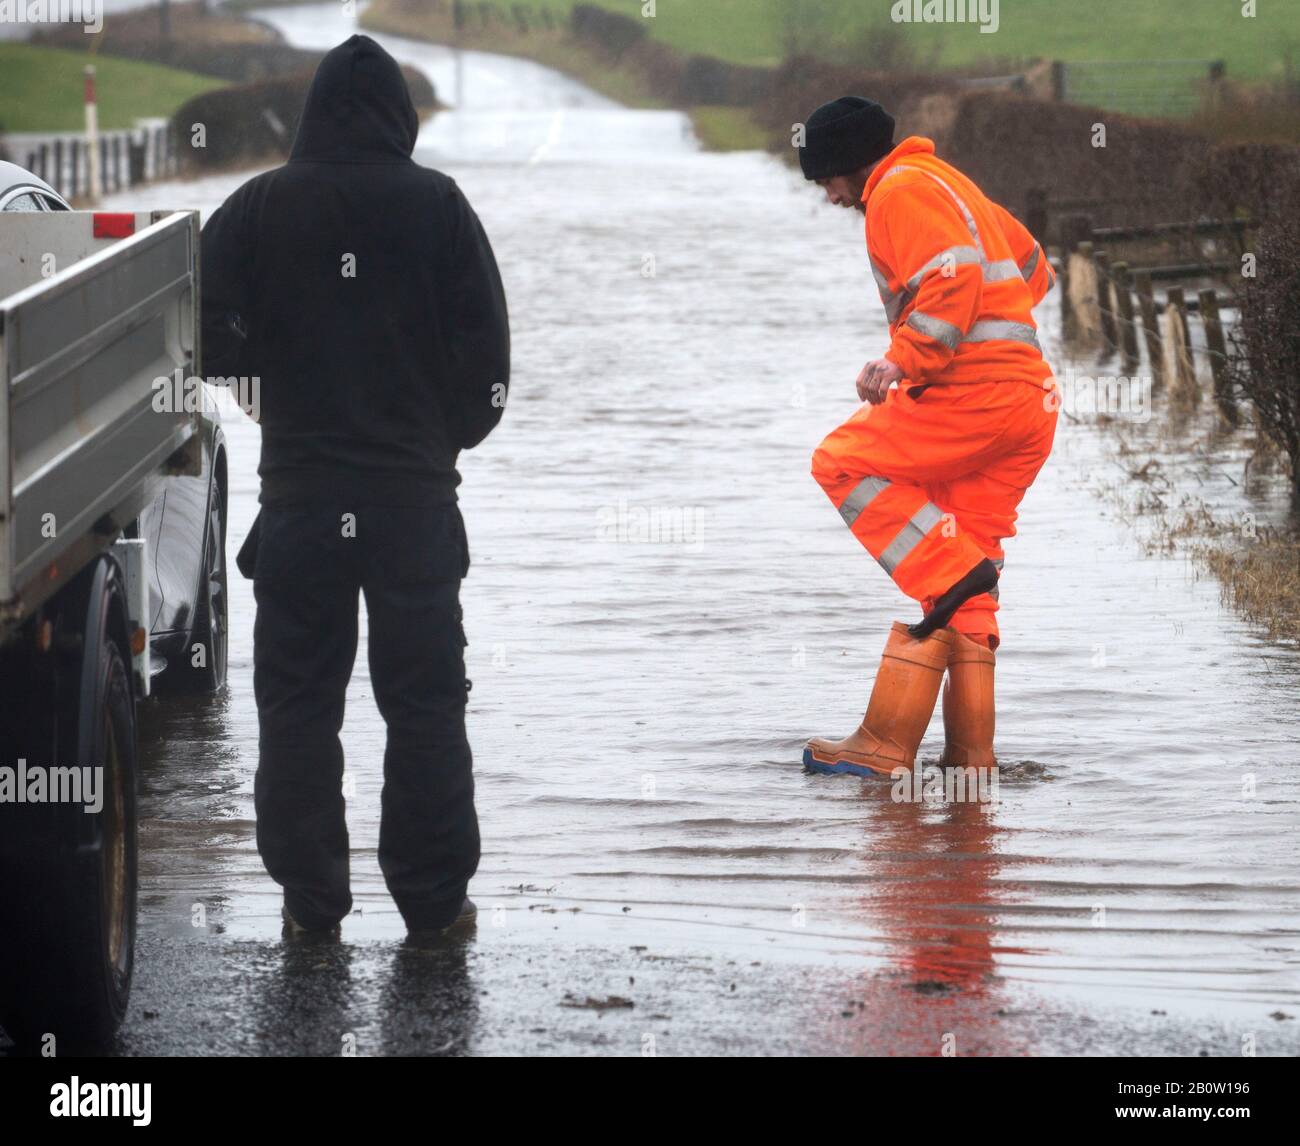 Kilbarchan, Scotland, UK. 21th February 2020.Roads closed due to flooding in Kilbarchan, Renfrewshire. Stock Photo